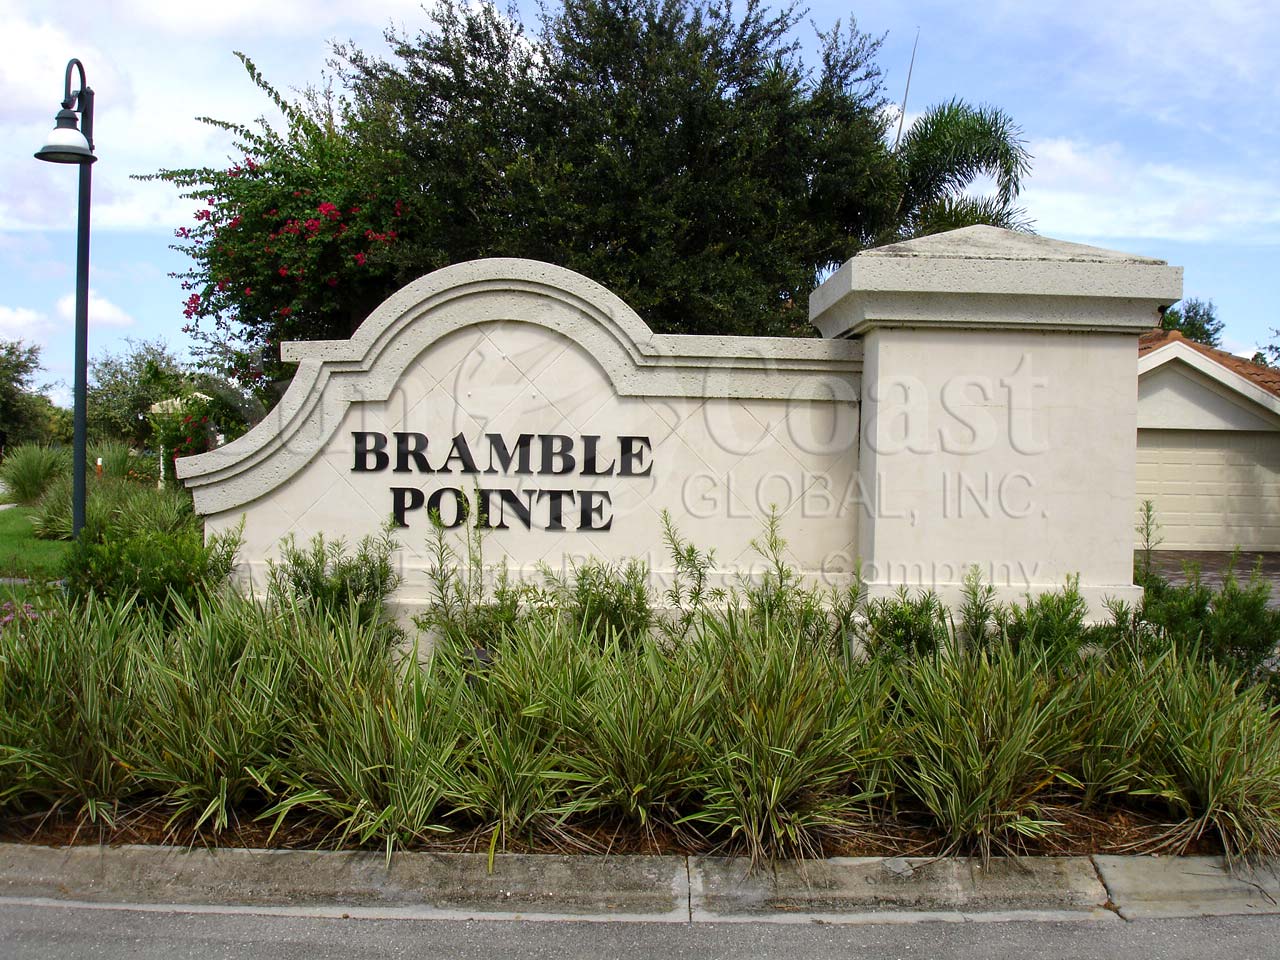 Bramble Pointe Signage